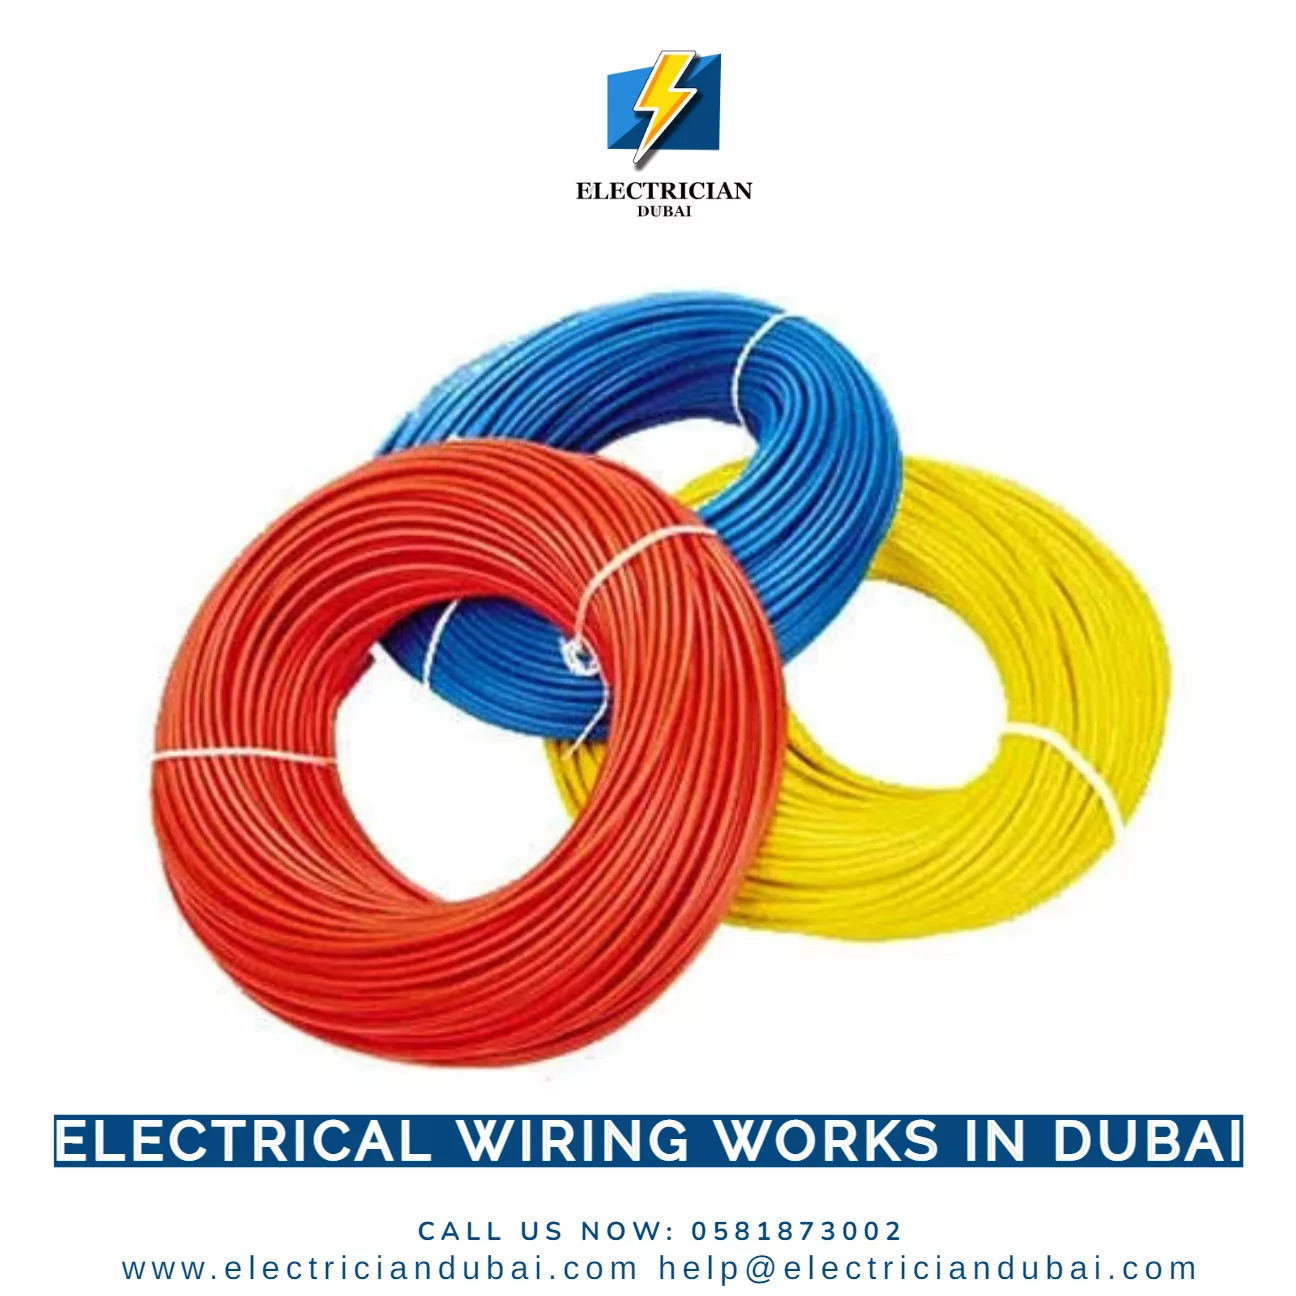 Electrical Wiring Works in Dubai